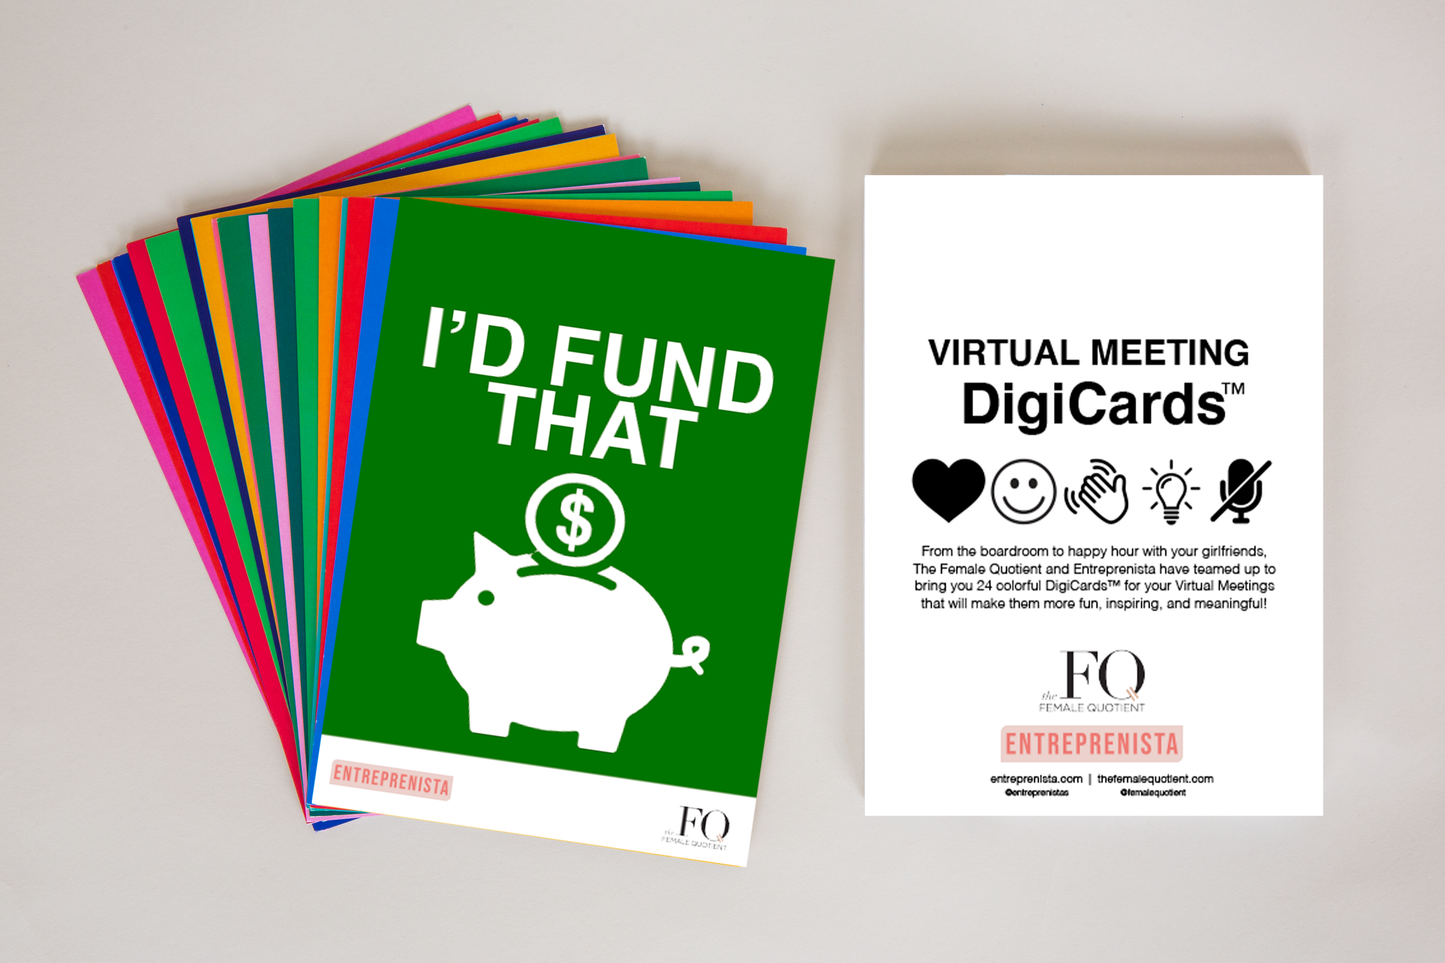 The FQ x Entreprenista Virtual Meeting Digicards™